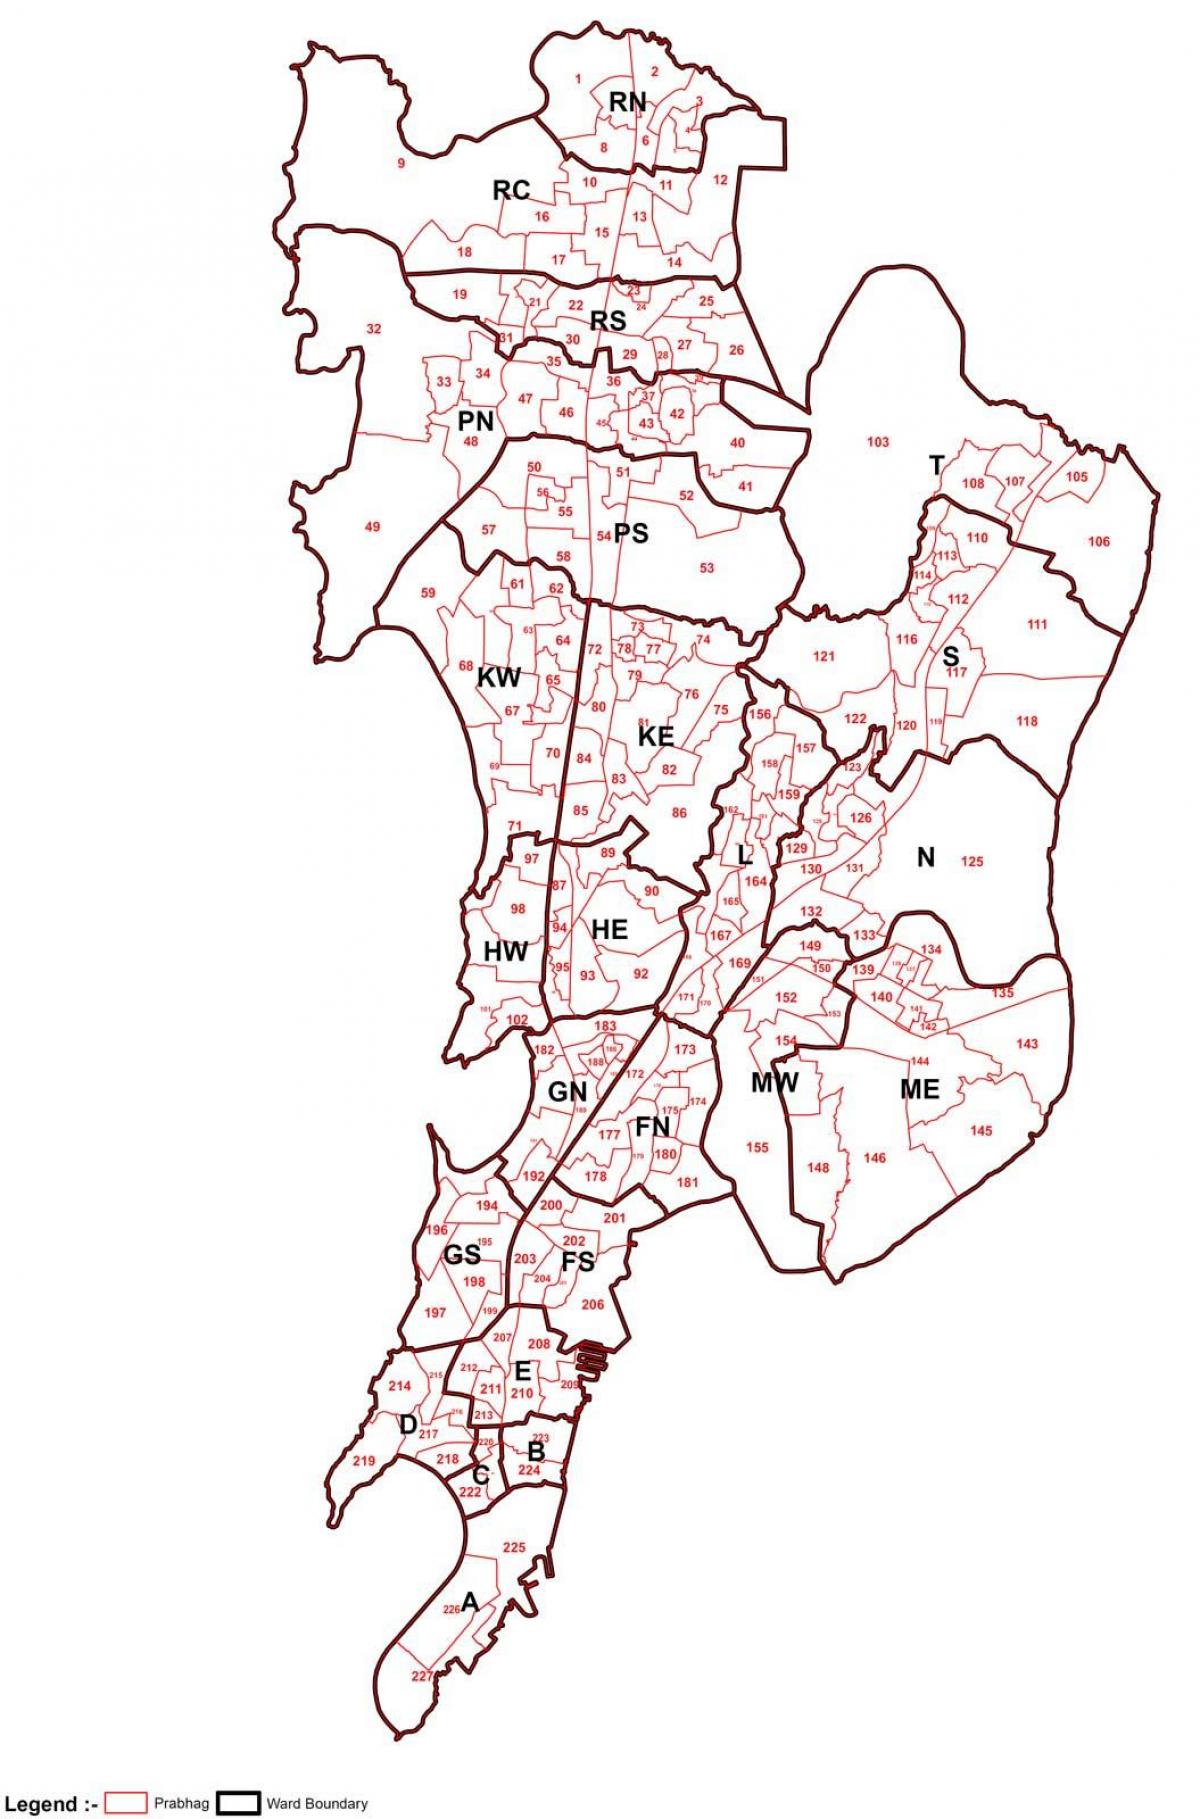 ward zemljevid v Mumbaju